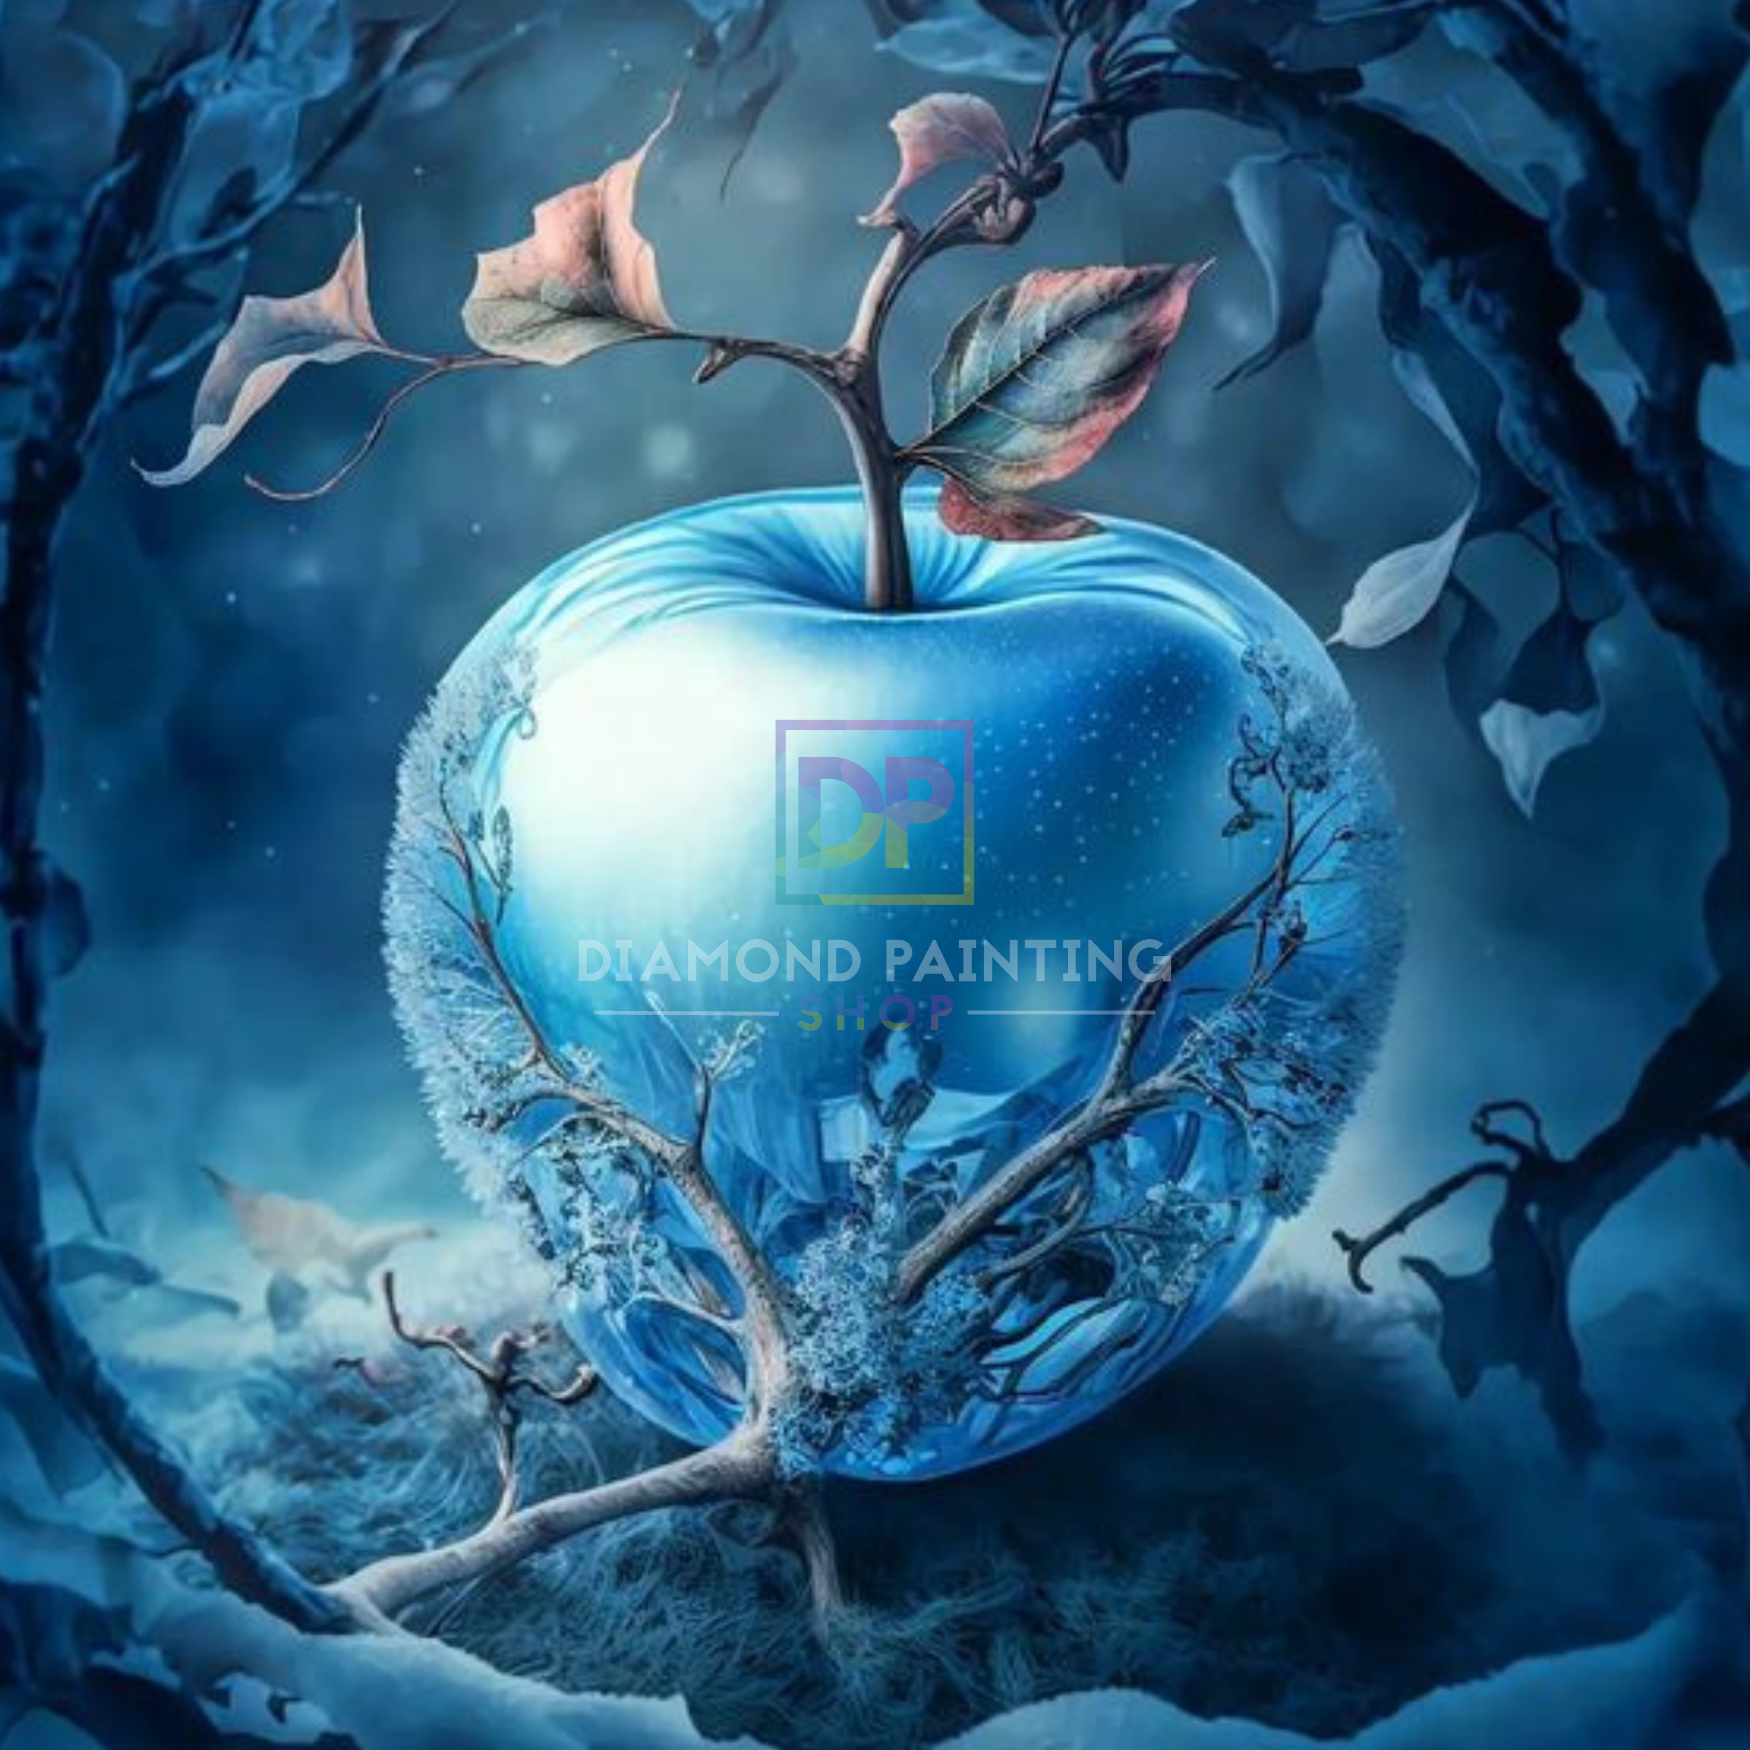 Fantasy "Iced Apple" 50x50cm